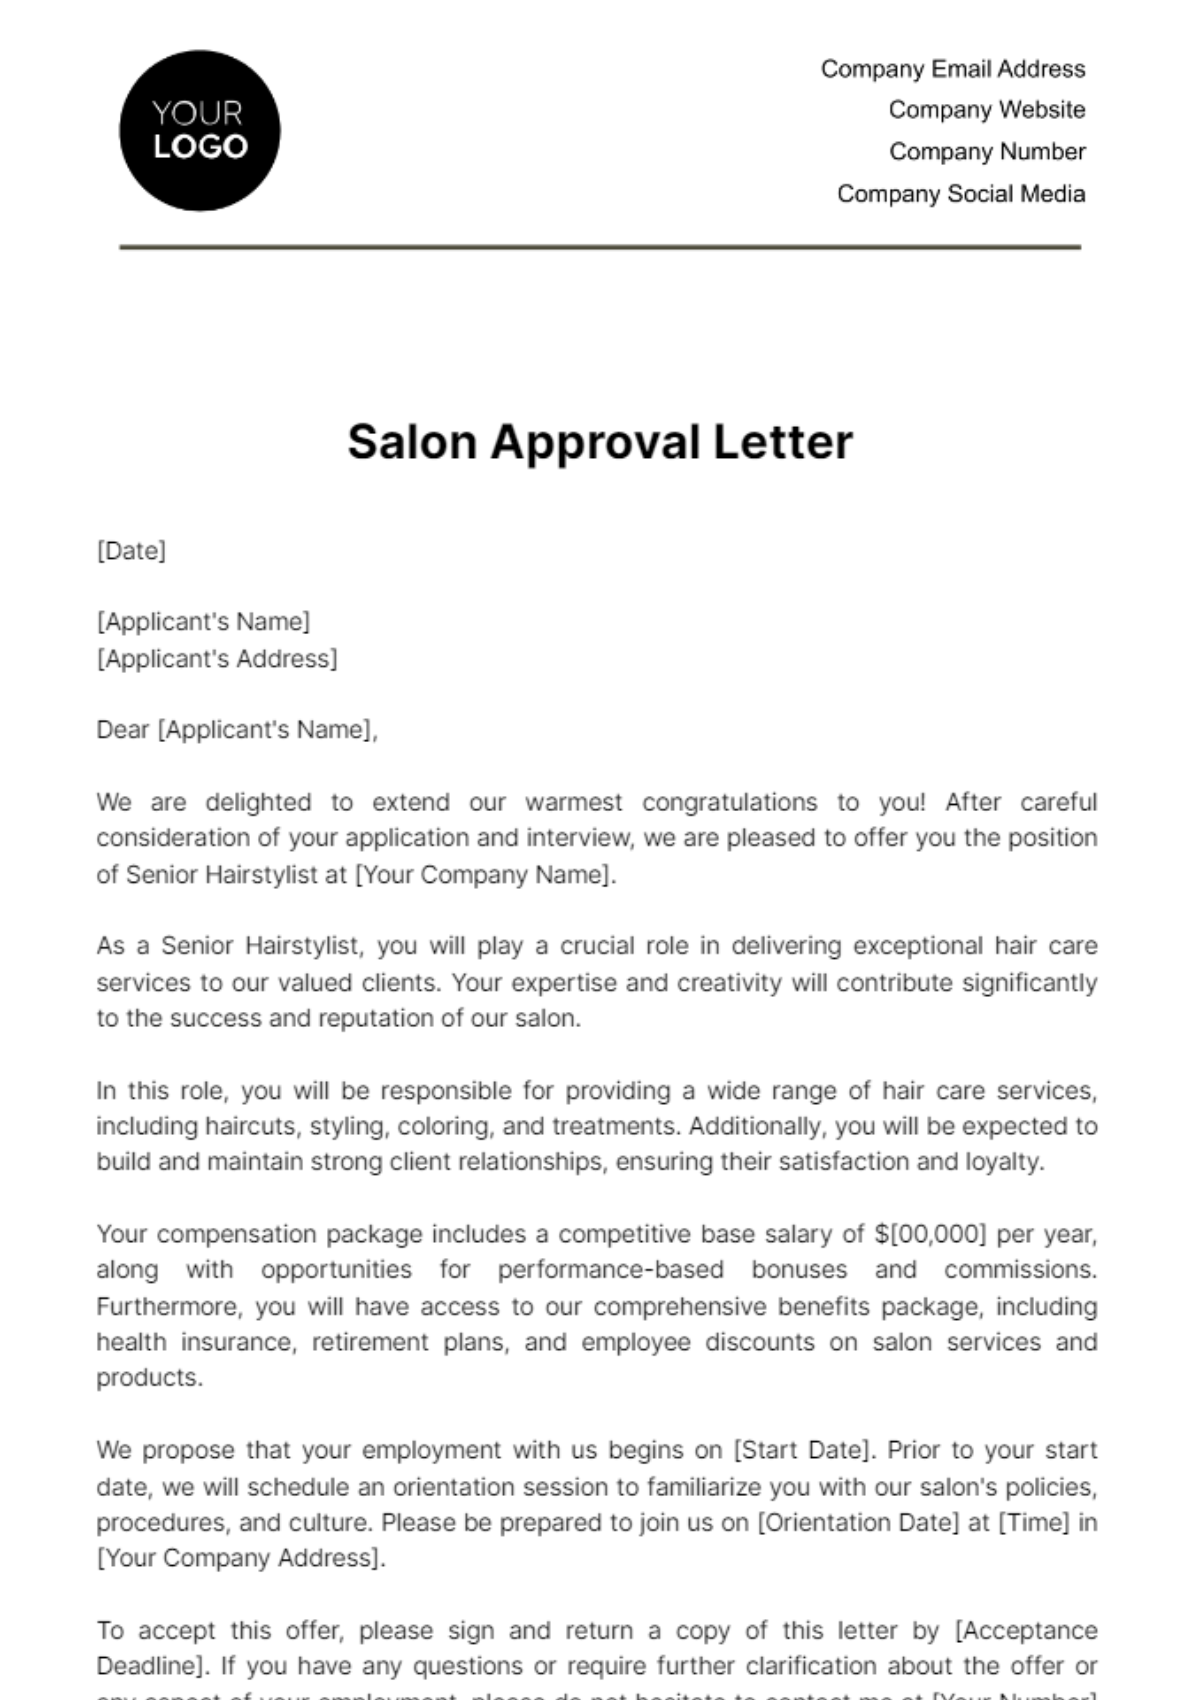 Salon Approval Letter Template